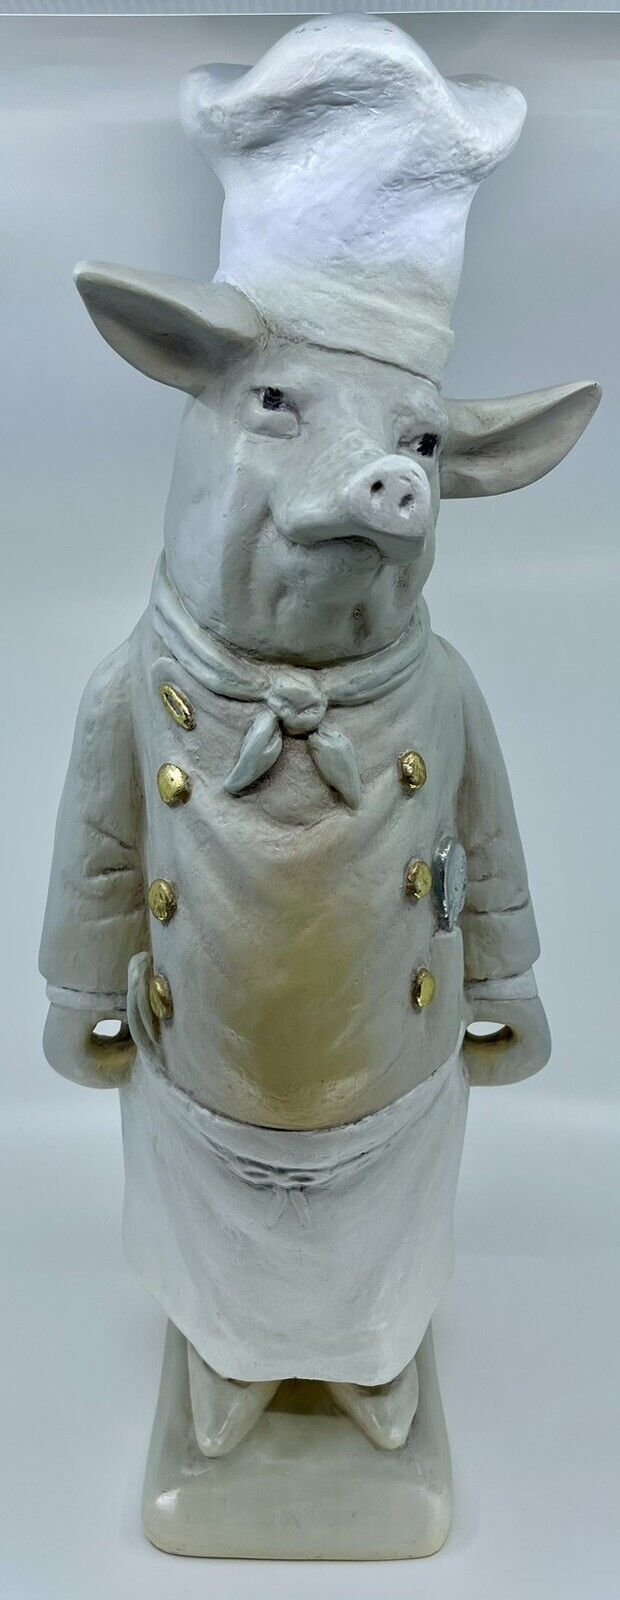 Vintage Large Chef Pig Statue Figurine French Pastry Butcher Shop Restaurant 24”